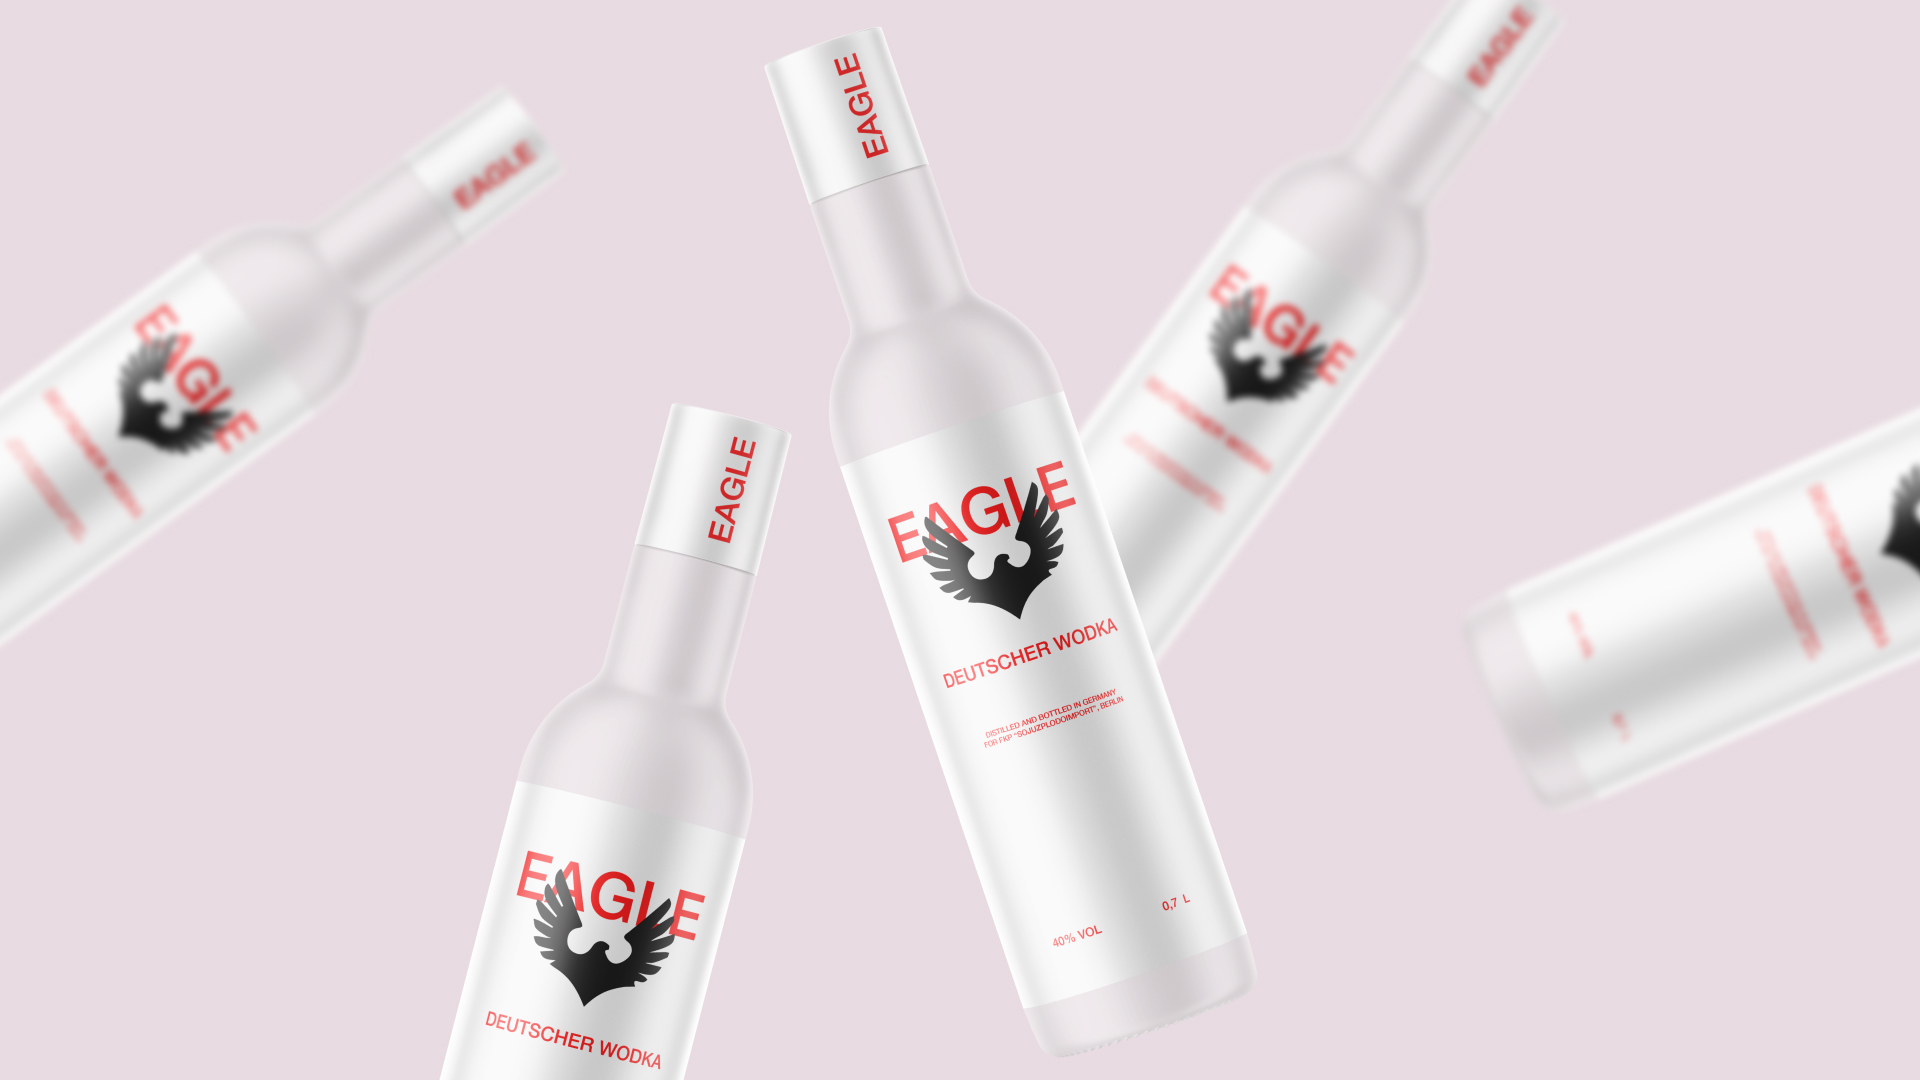 Student Victoria Gumarshina Creates Packaging Design Concept for Eagle Vodka